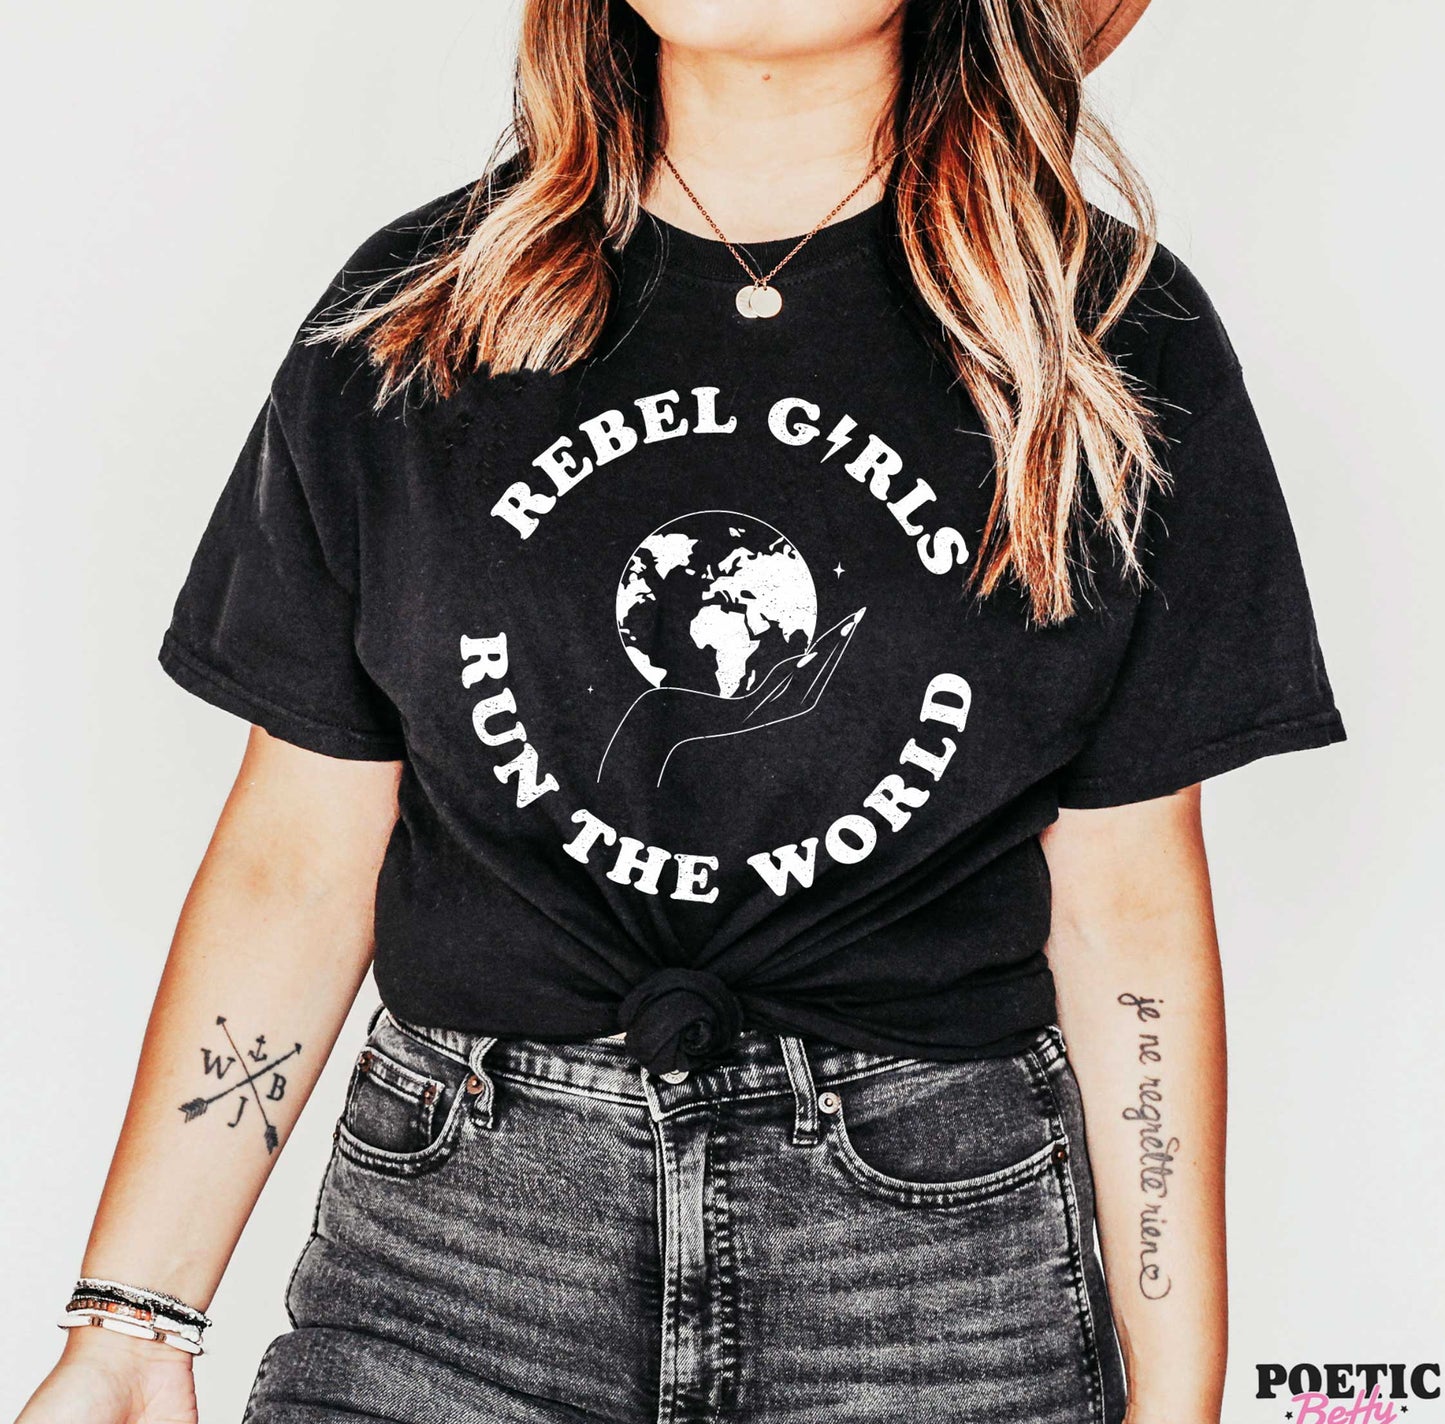 Rebel Girls Run The World *SALE* Unisex Black T-Shirt